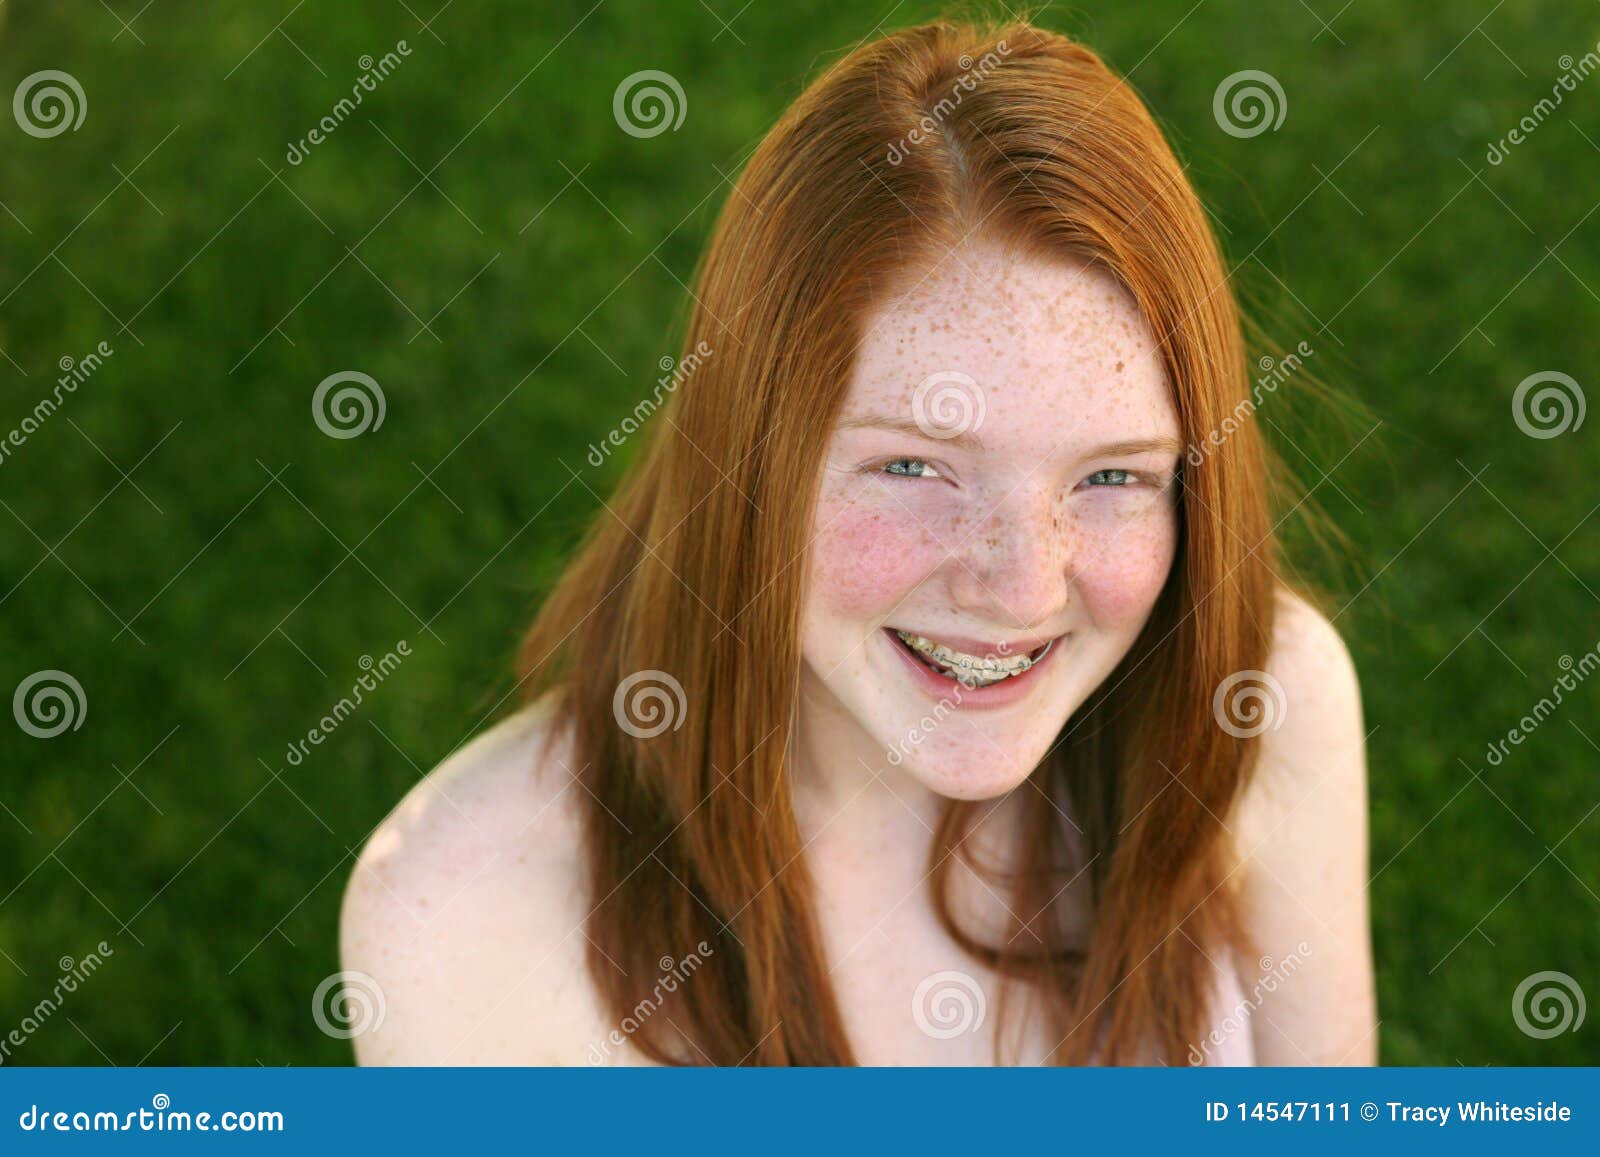 redhead girls with braces